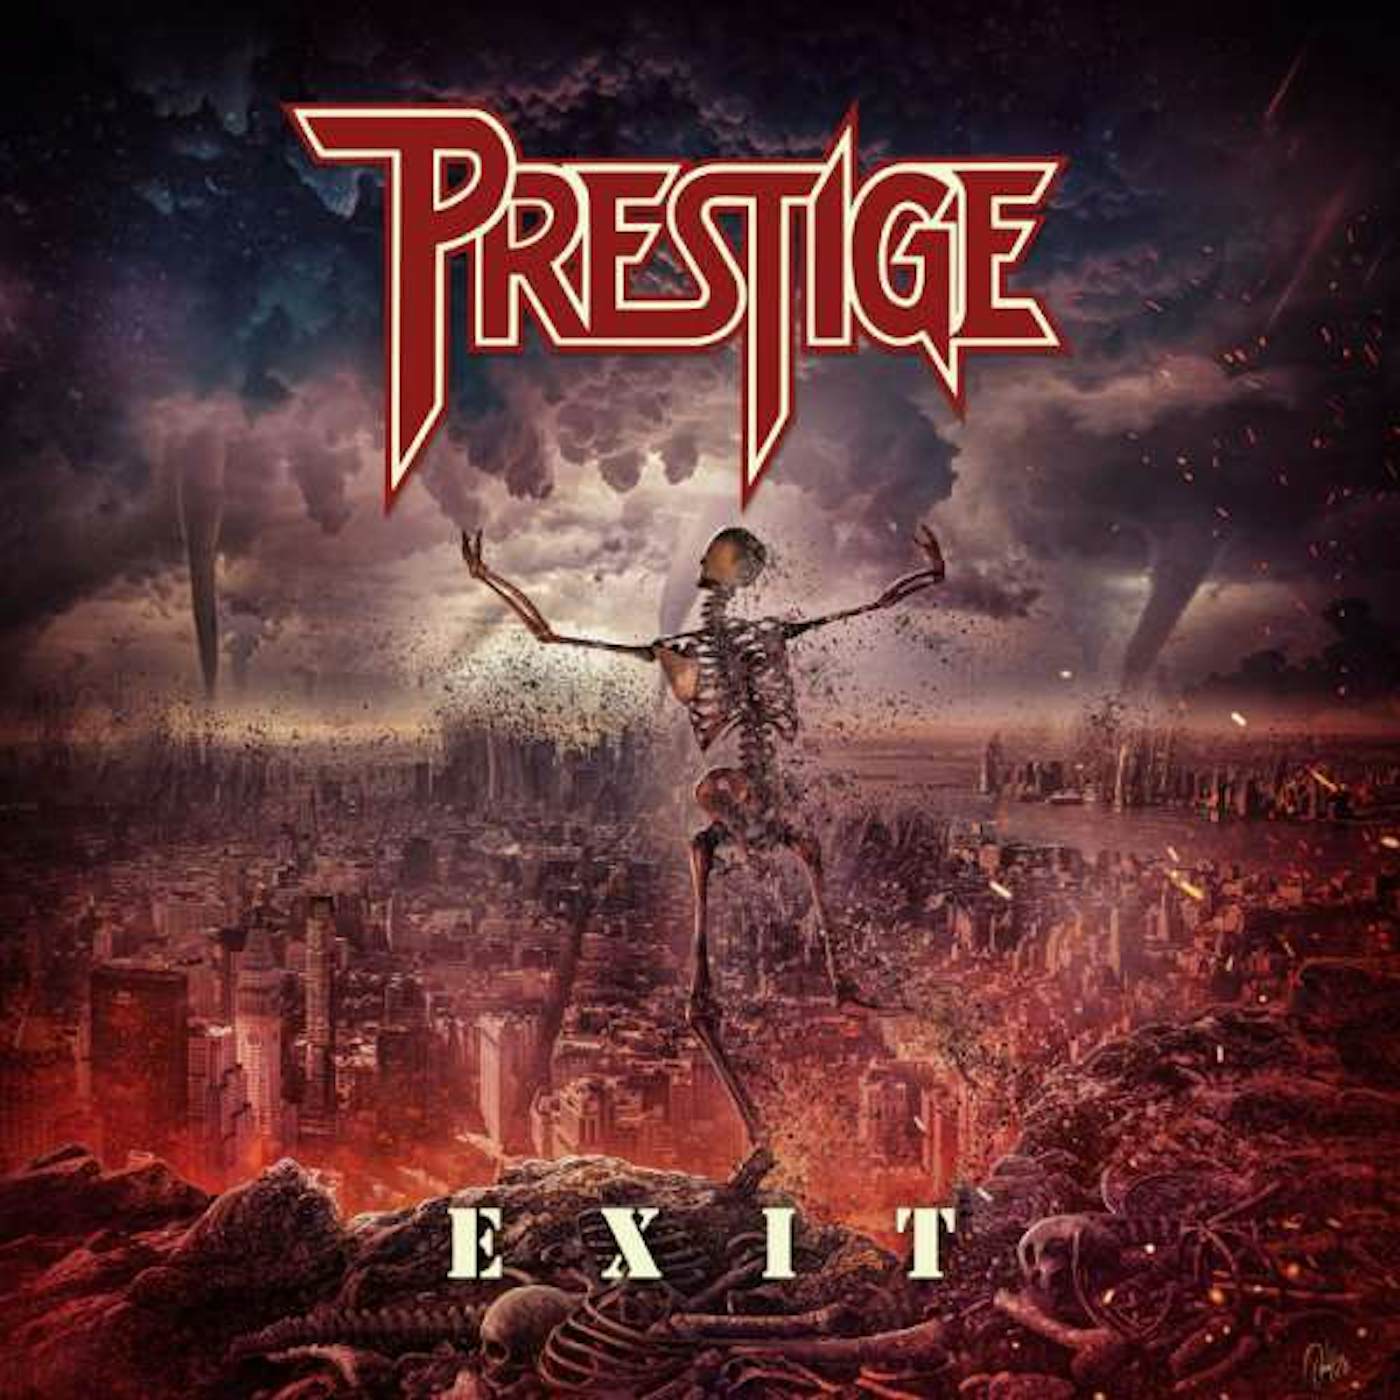 Prestige EXIT Vinyl Record